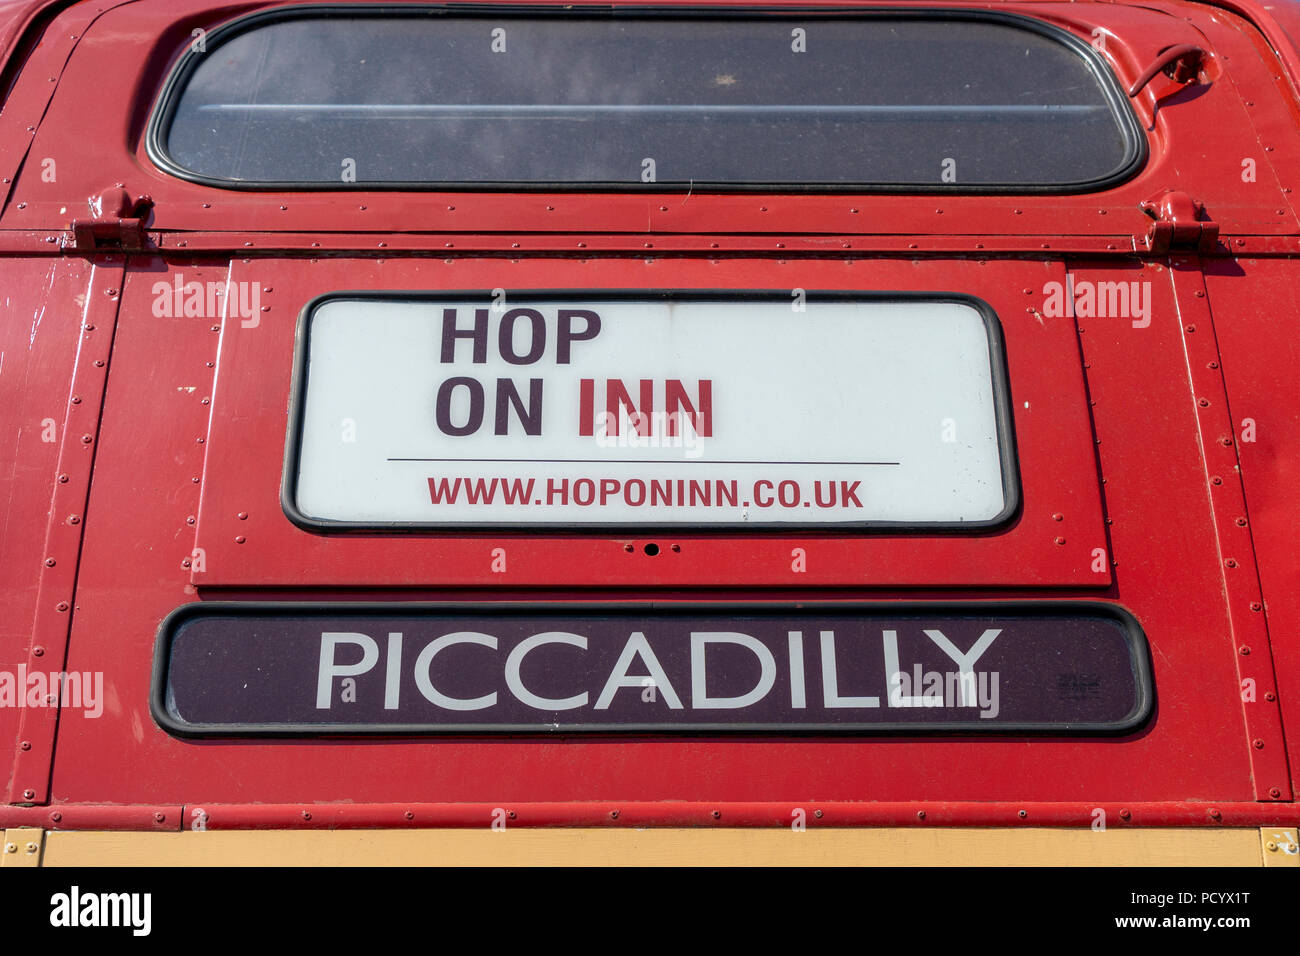 Viejo autobús londinense convierte a mobile bar y pub llamado "Hop on Inn Foto de stock